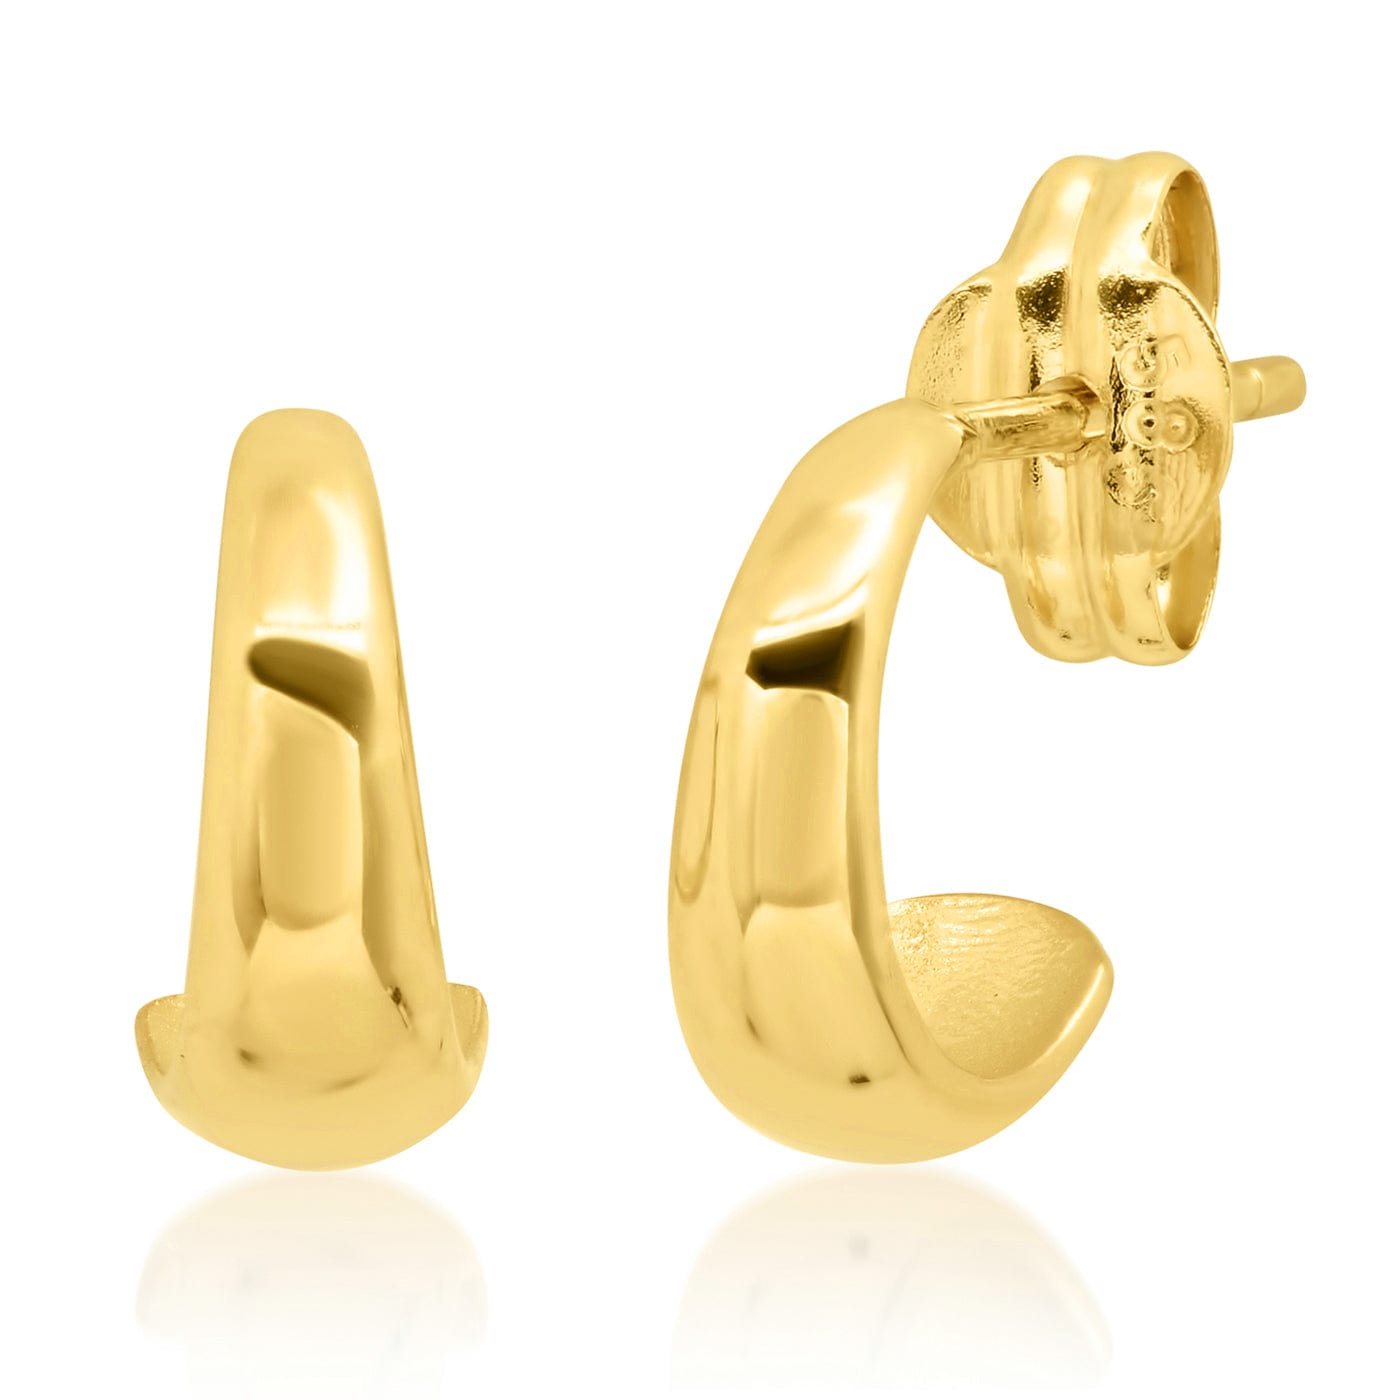 TAI JEWELRY Earrings 14k Gold 14k Tapered Hoops